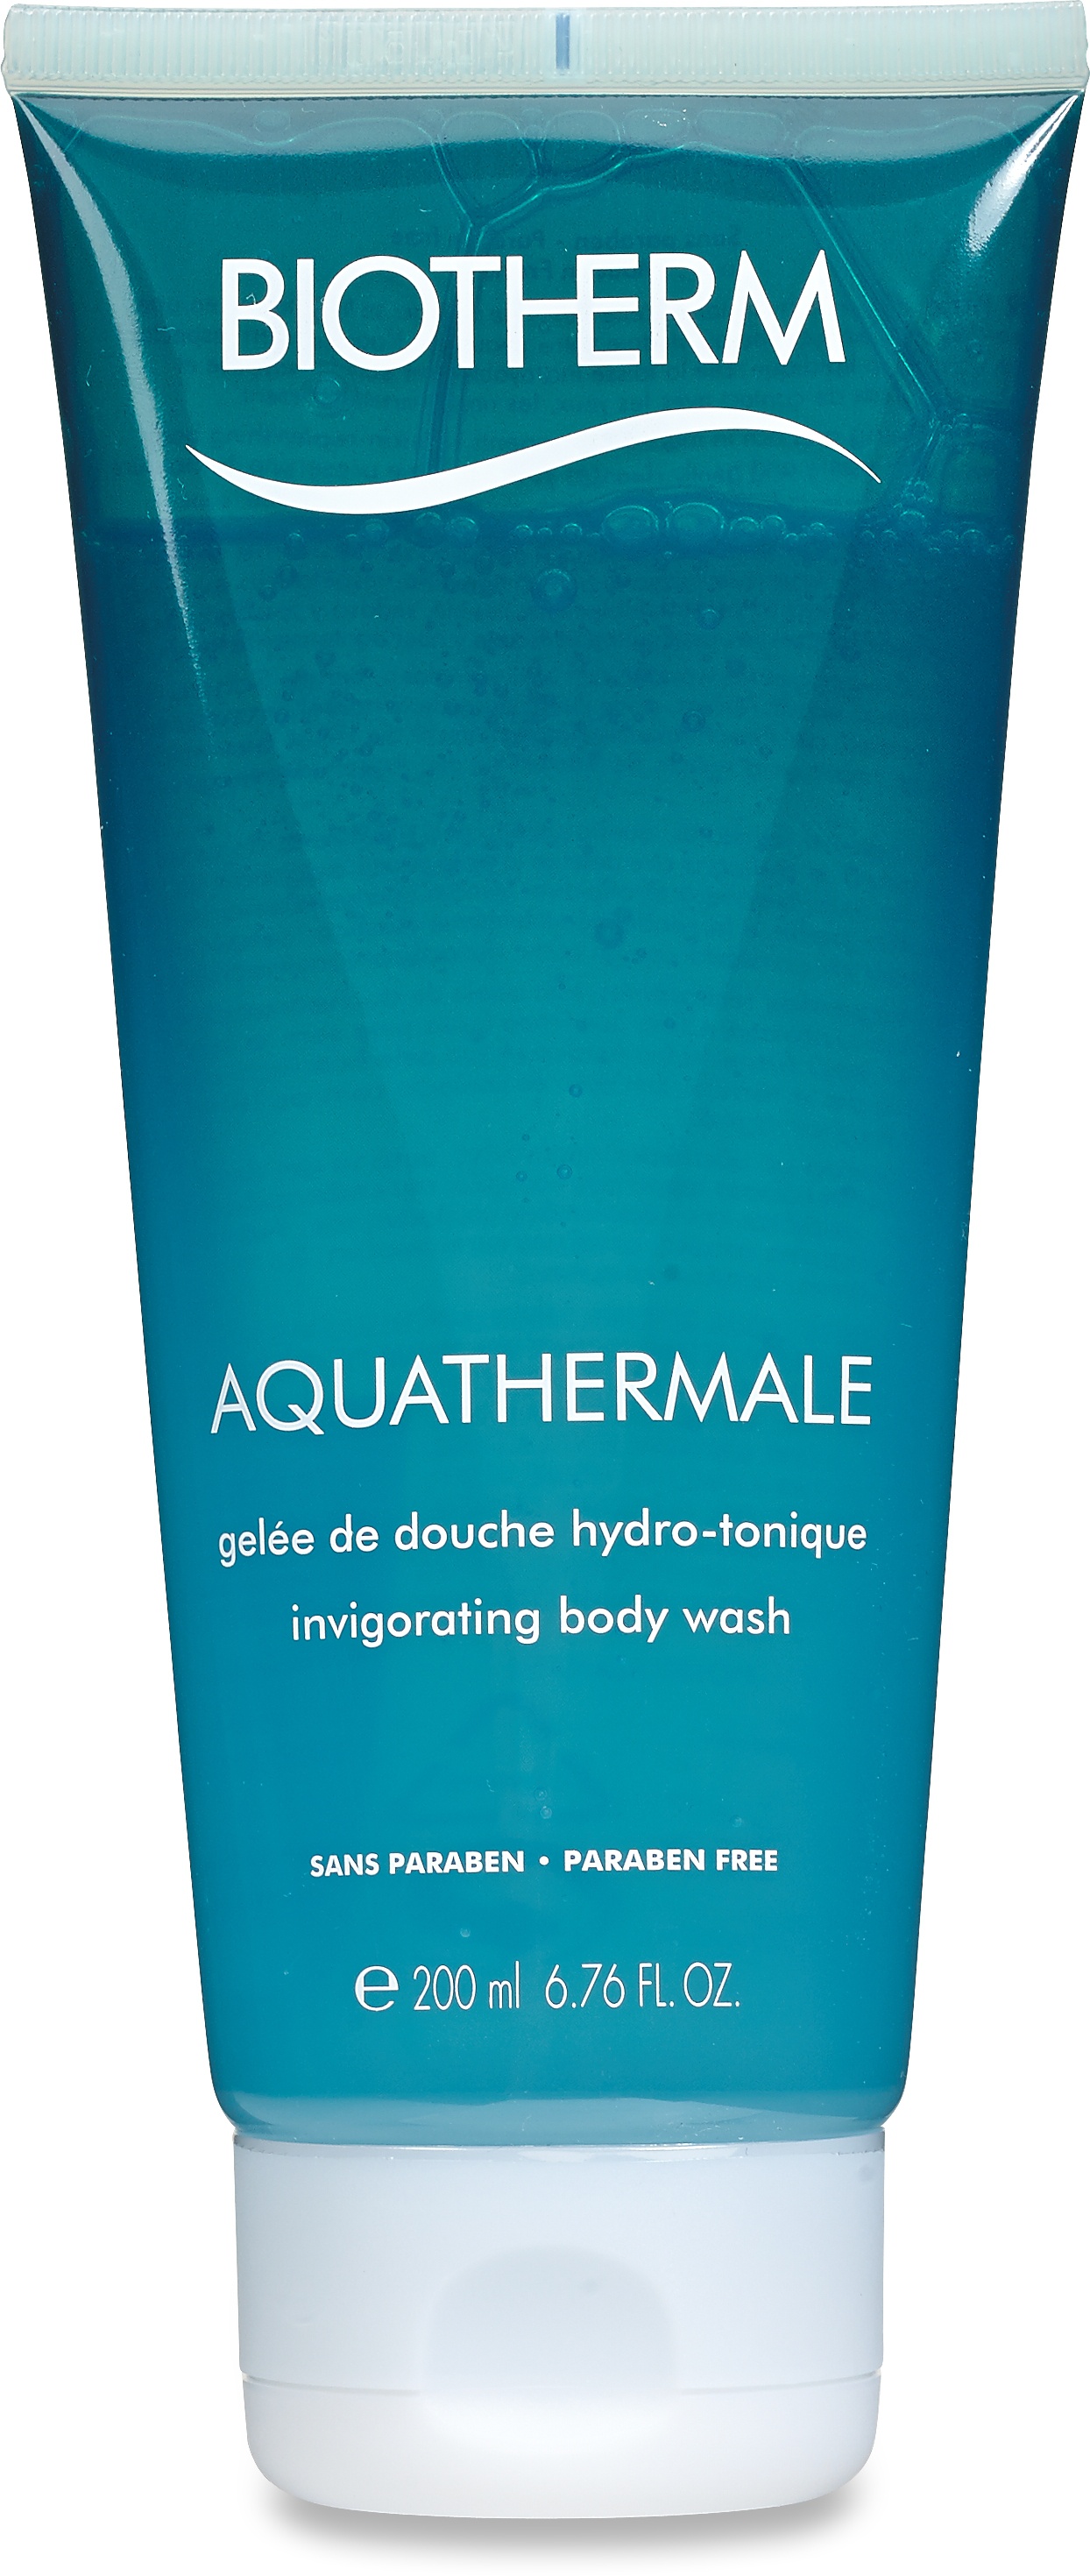 Aquathermale Invigorating Body Wash